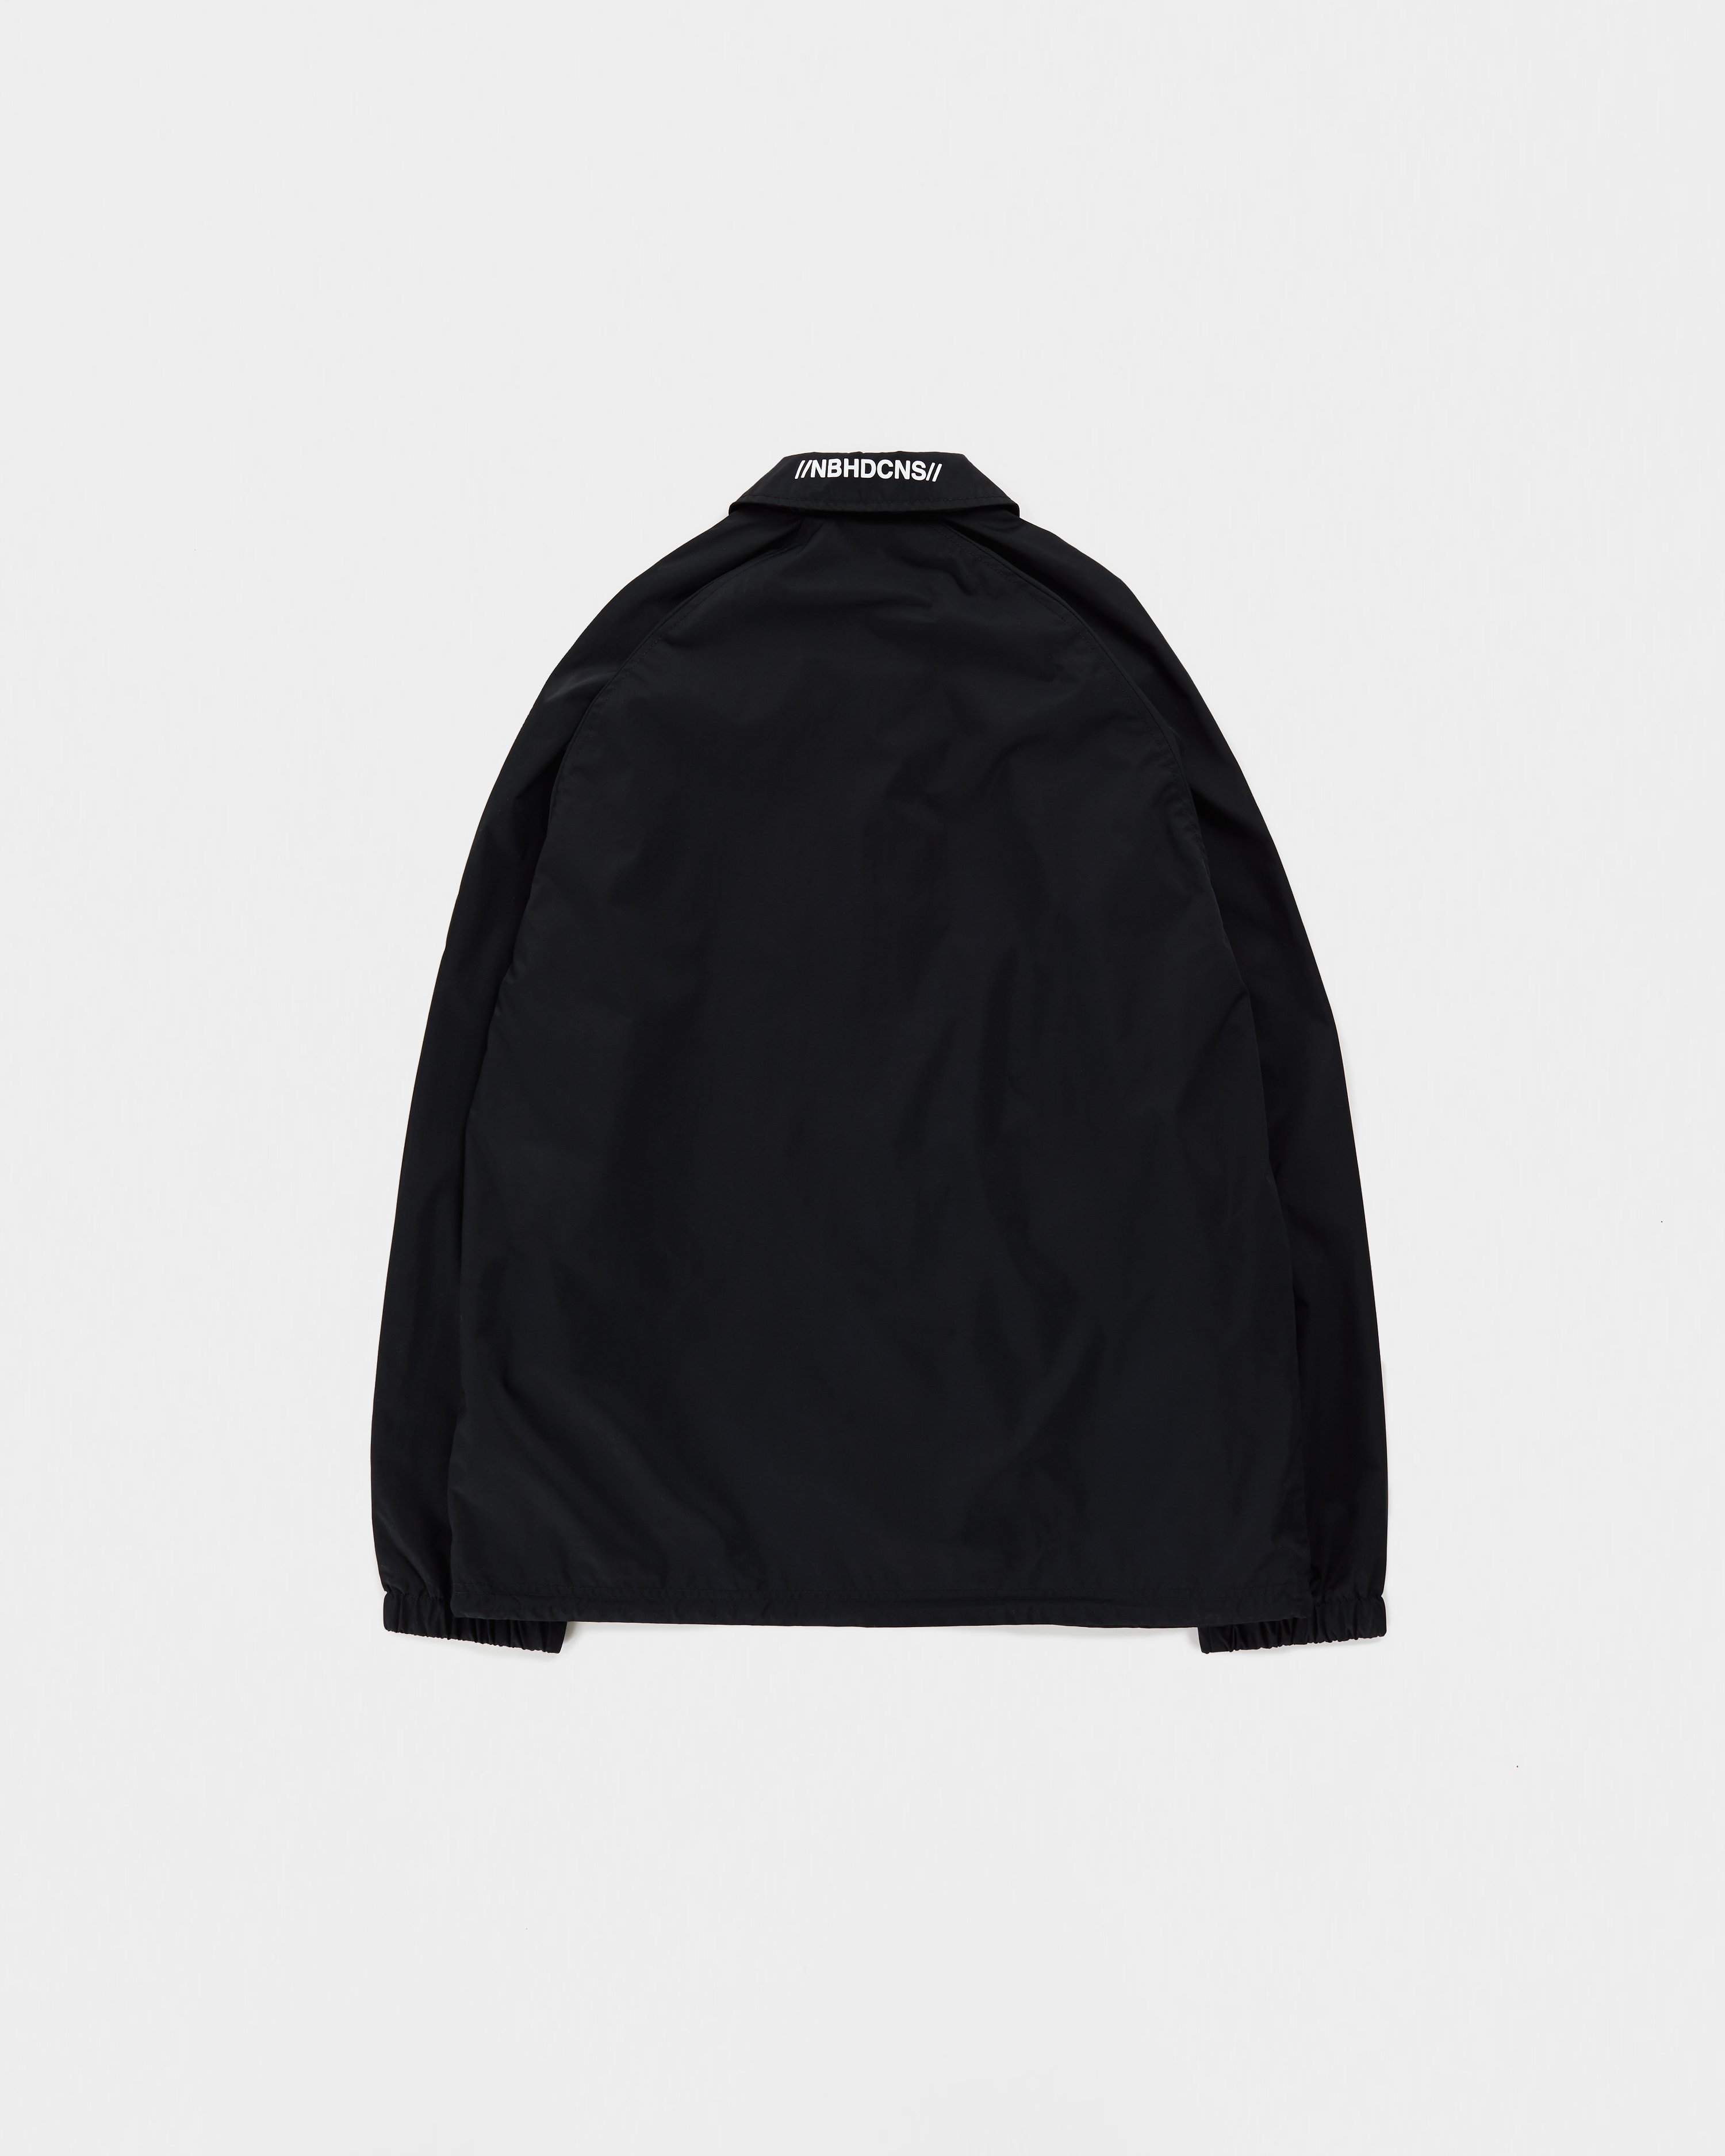 Converse x NBHD - Black Coaches Jacket - Clothing - Black - Image 2